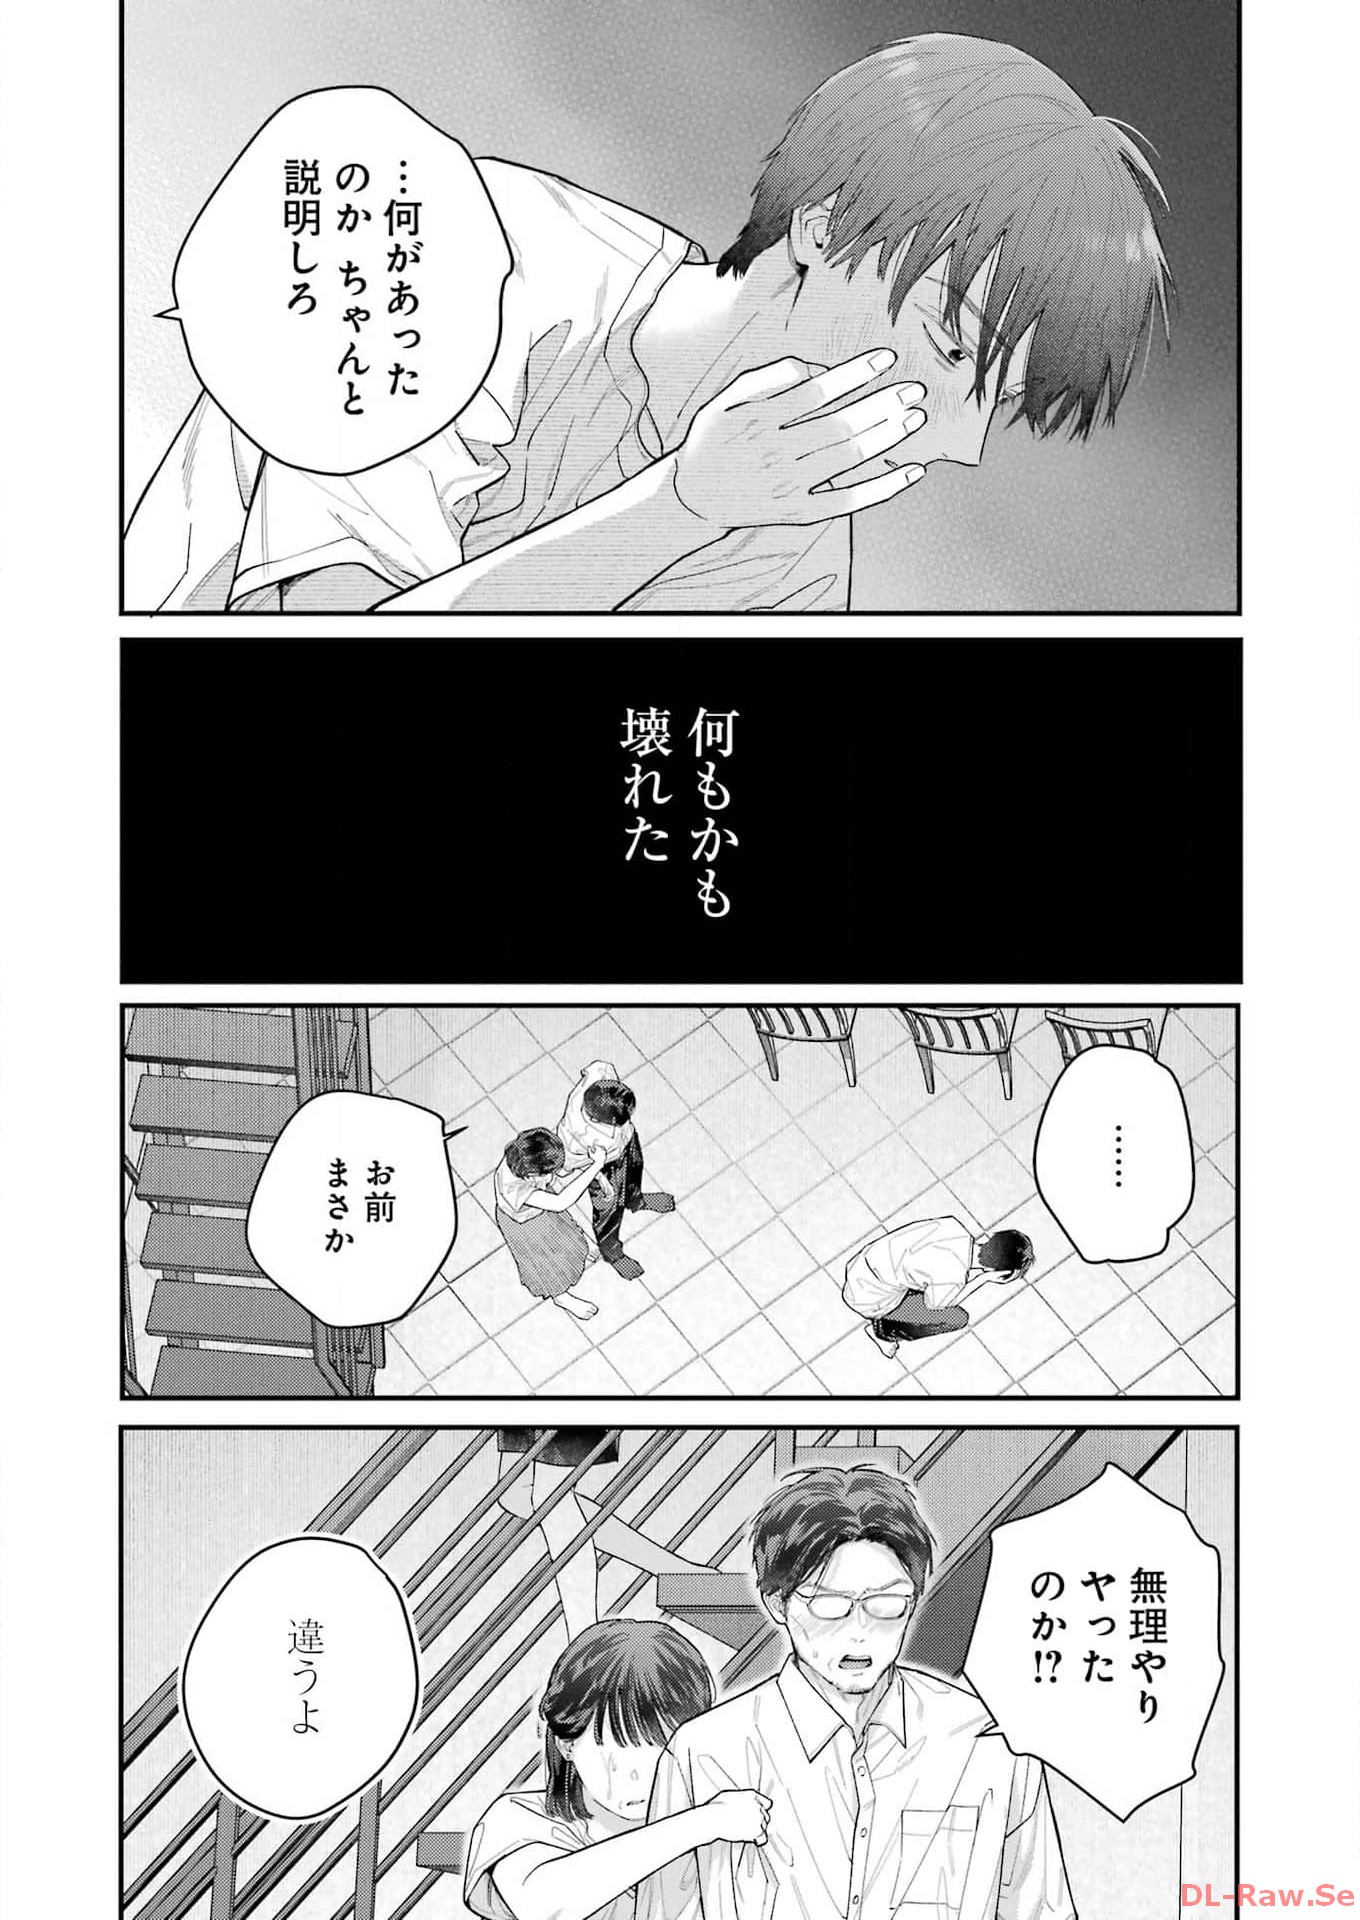 Jigoku ni Ochite yo, Onii-chan - Chapter 28 - Page 2